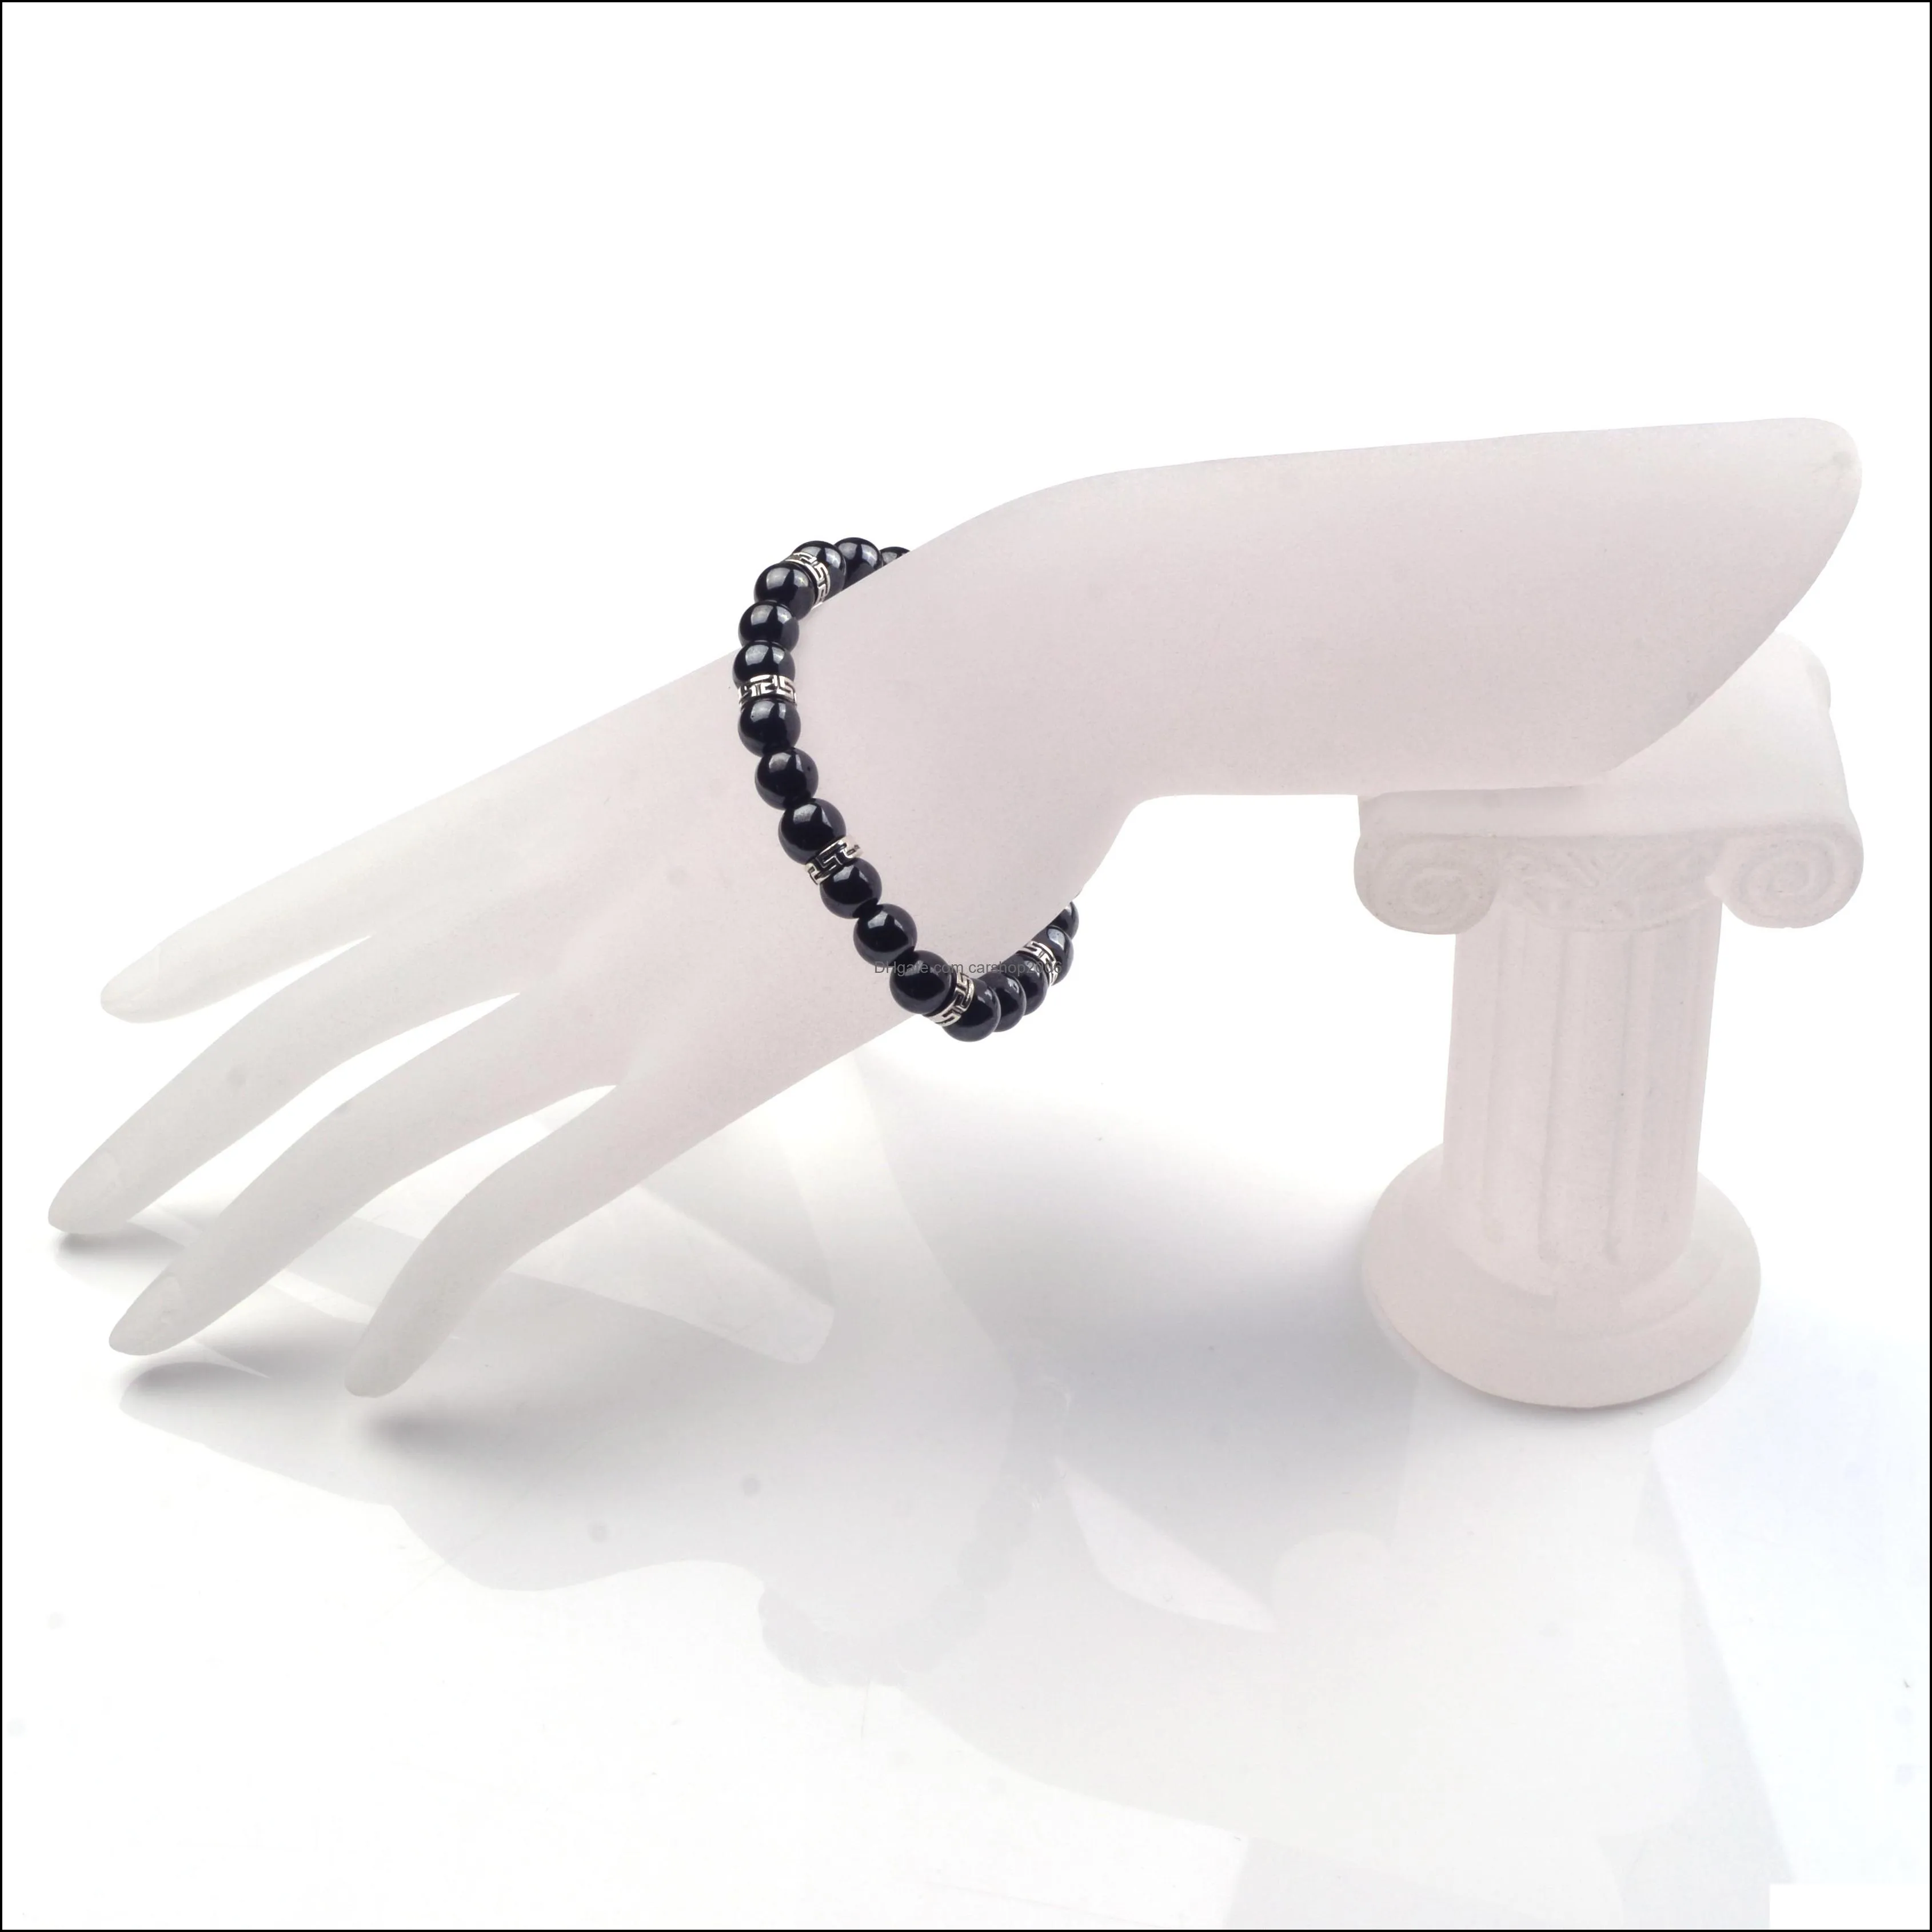 hot 2018 ladies men 8mm natural stone bracelet yoga beads bracelet bracelet jewelry gift